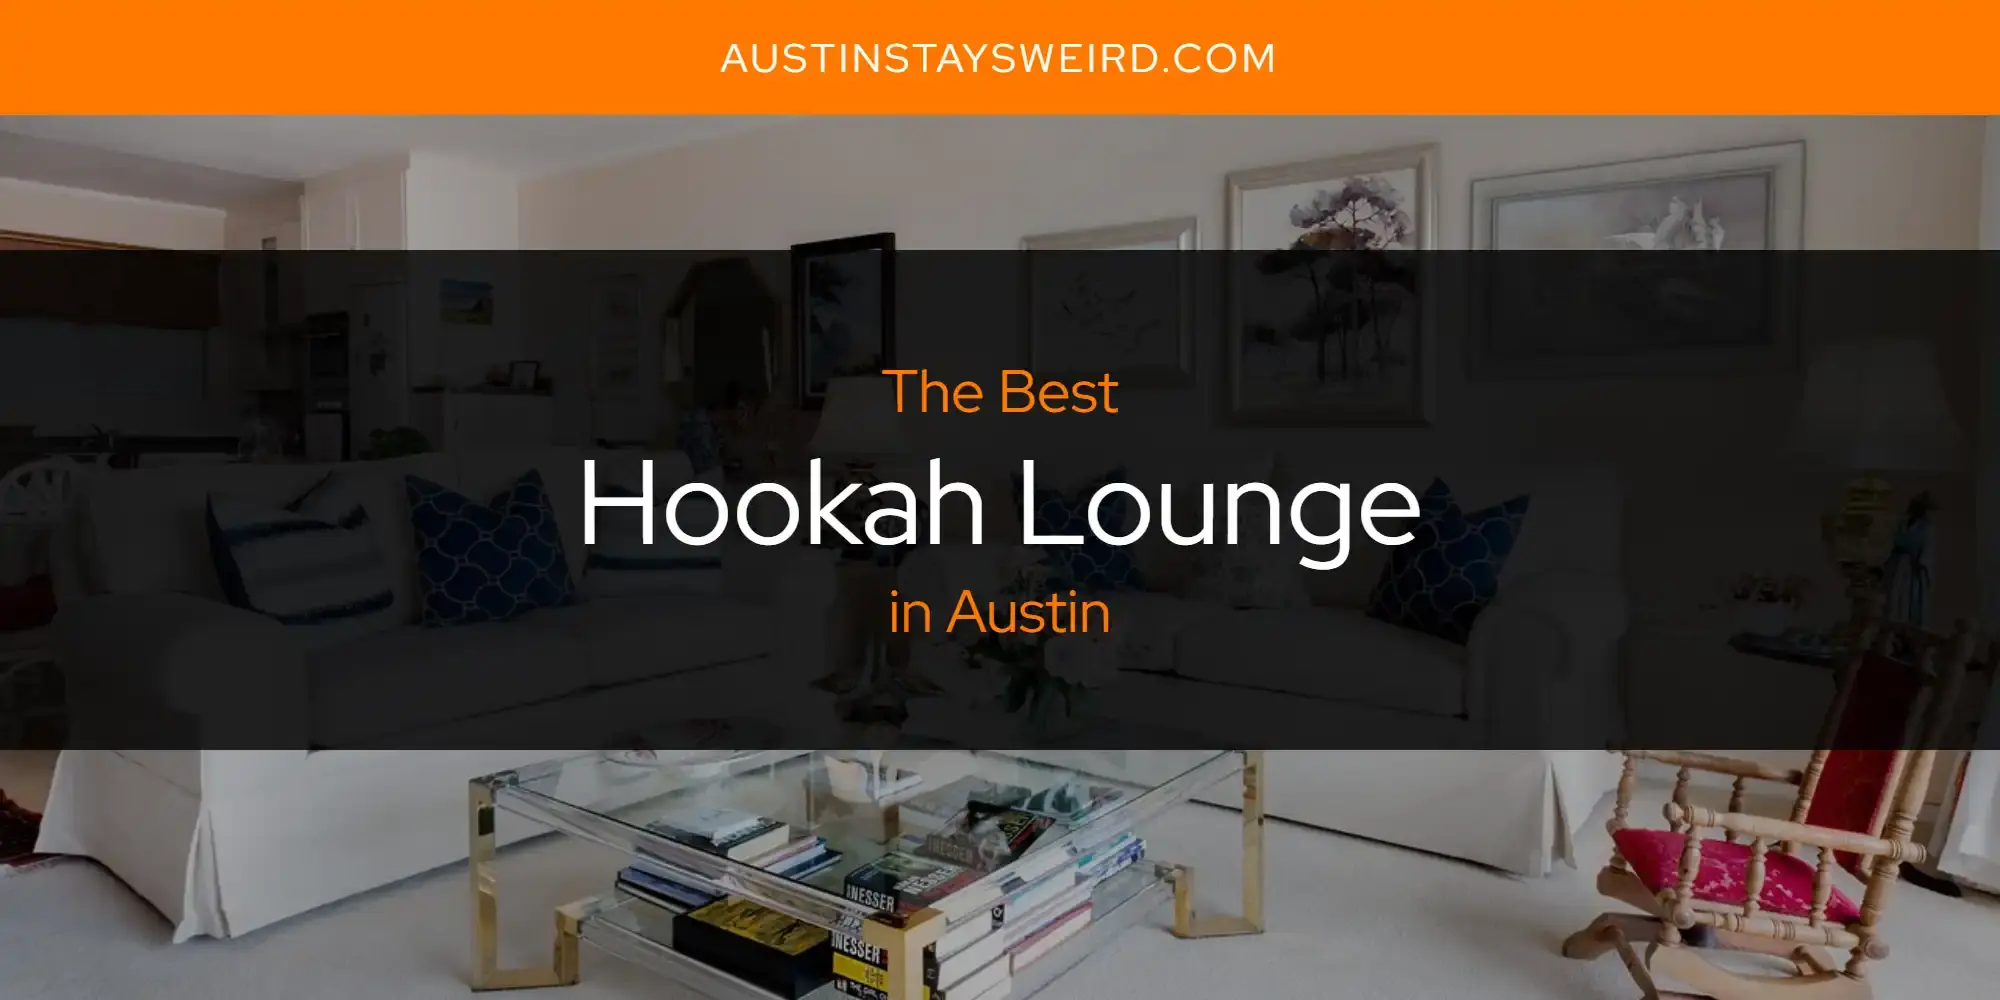 Best Hookah Lounge in Austin? Here's the Top 8